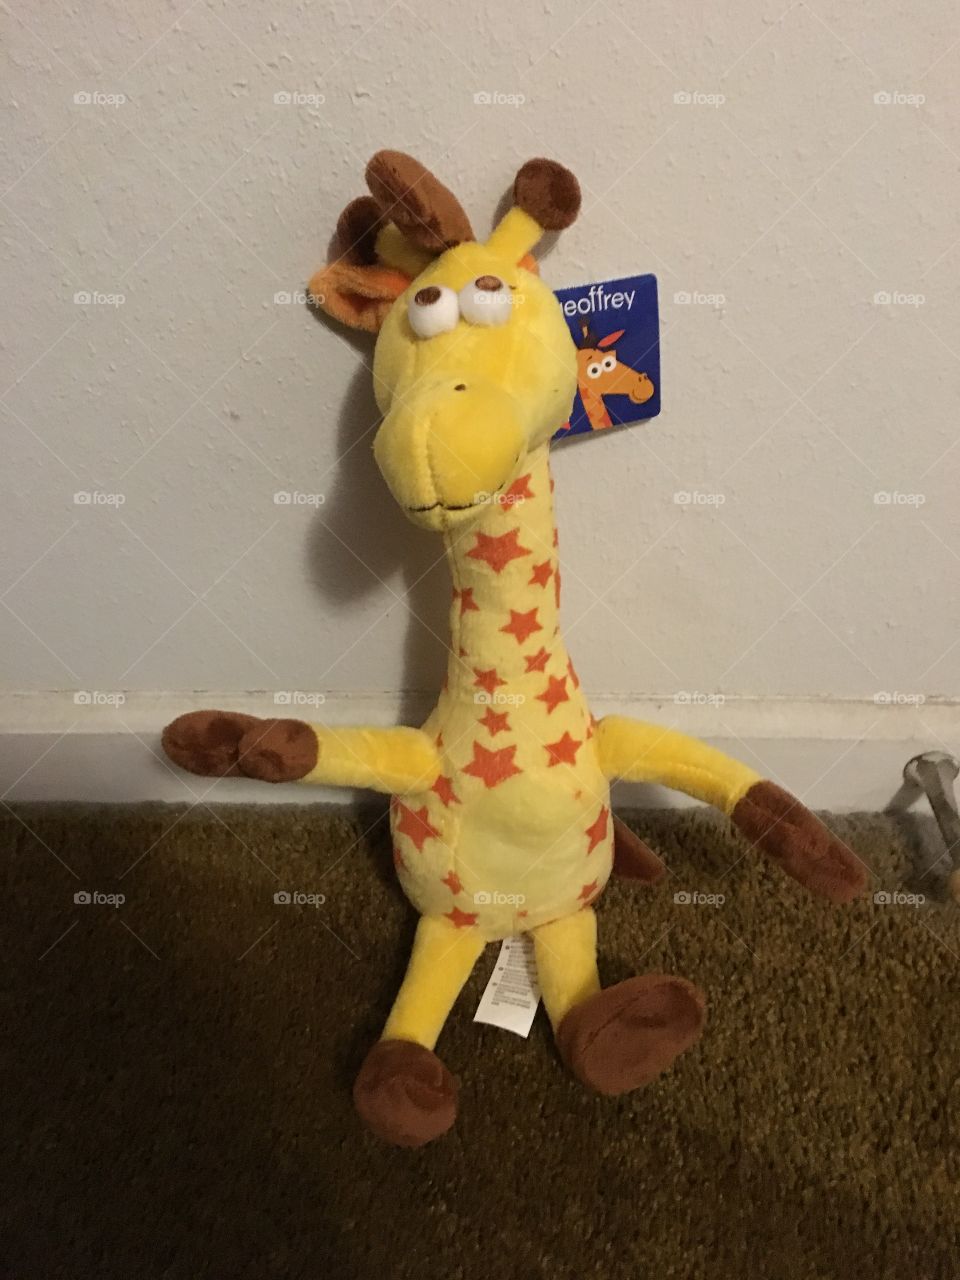 Geoffrey the Giraffe 